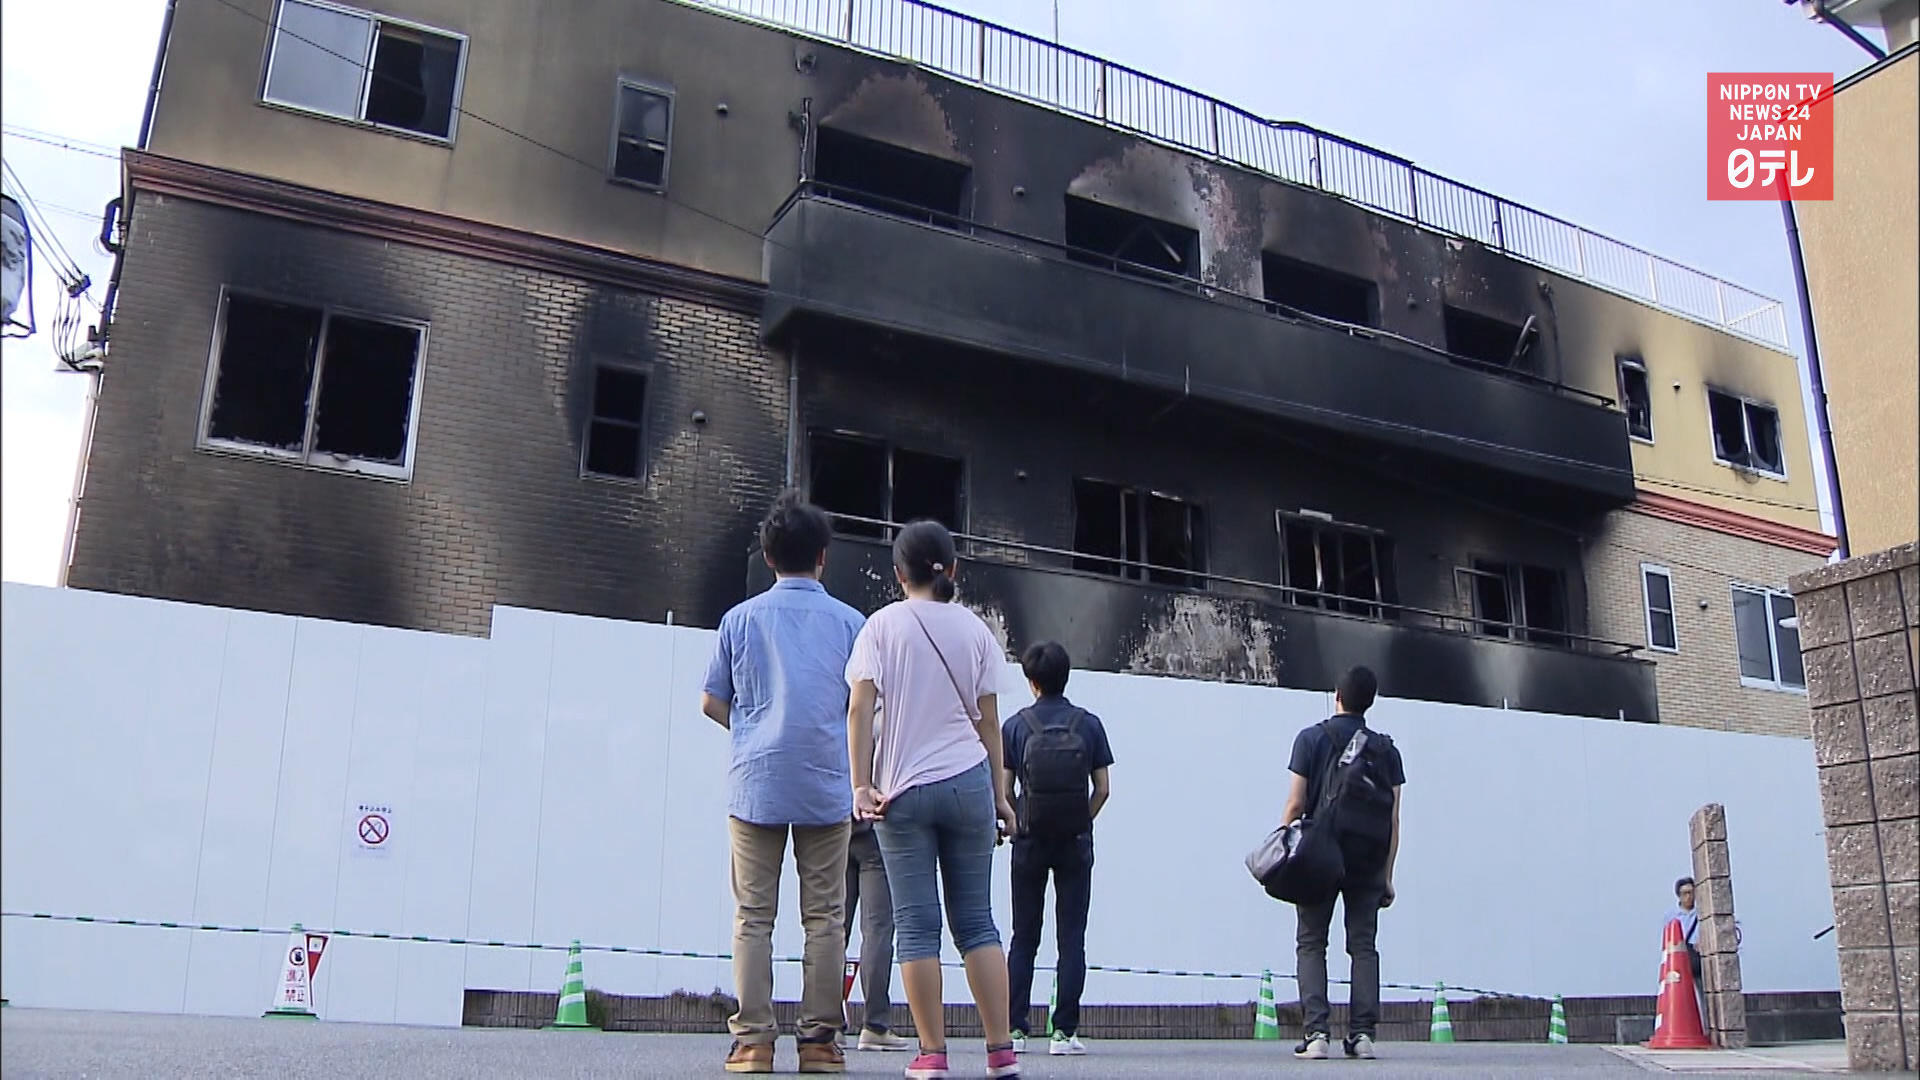 Kyoto Animation fire survivor tells story